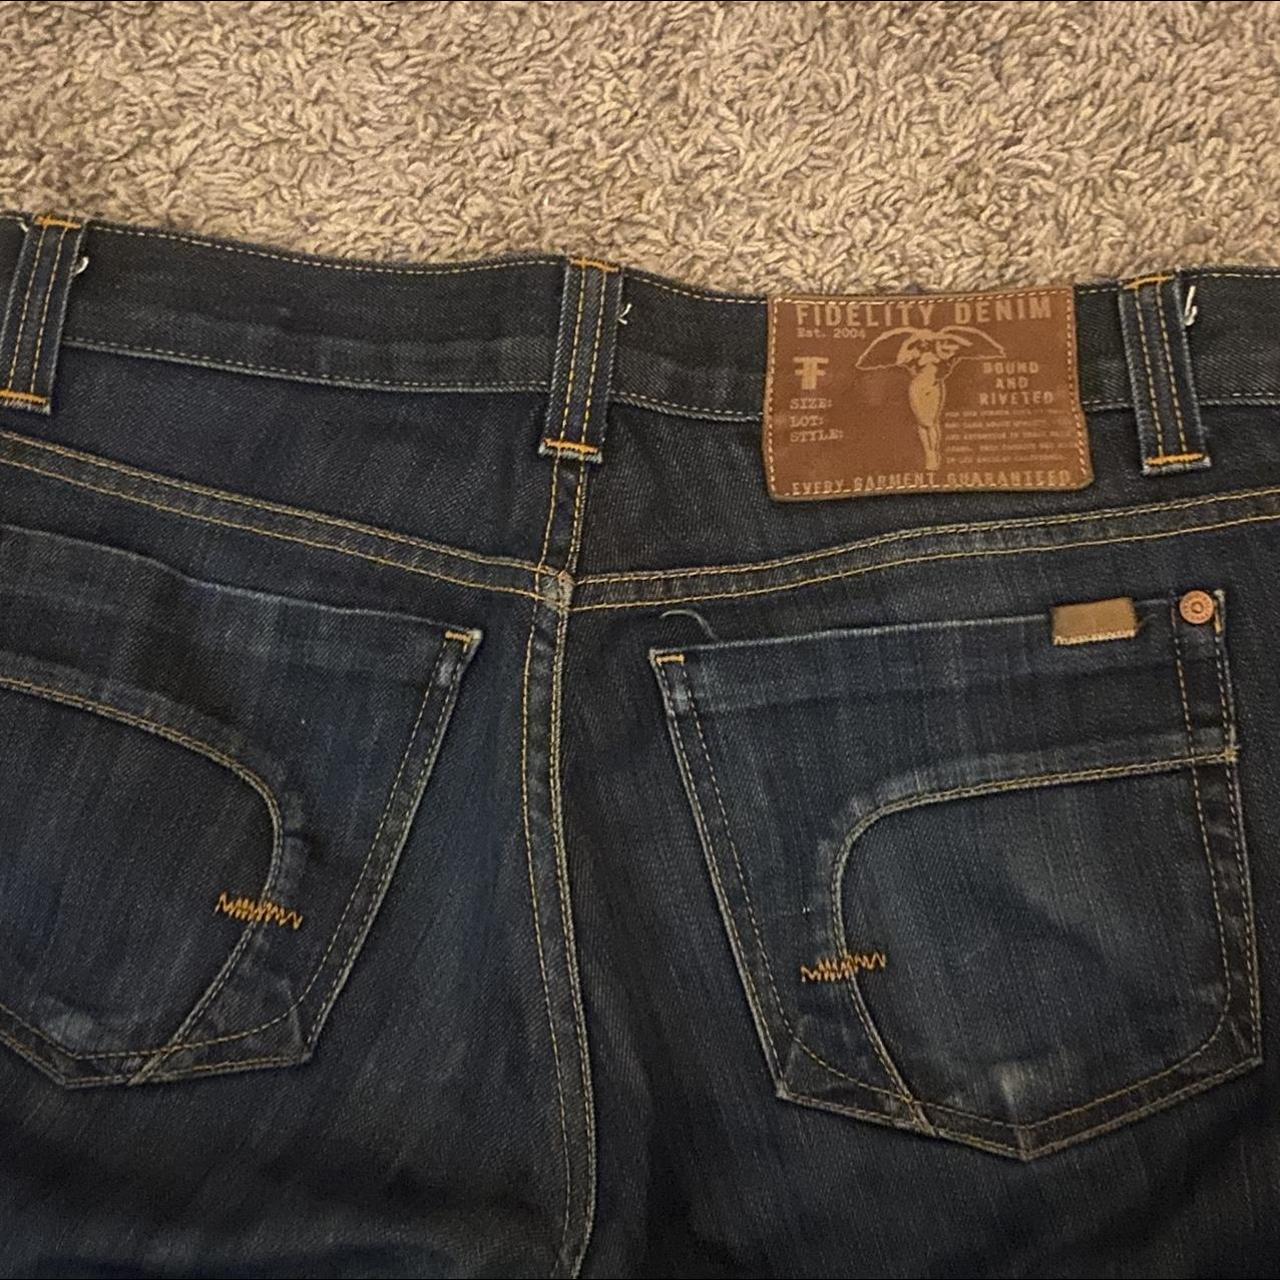 Vintage fidelity jeans - Depop